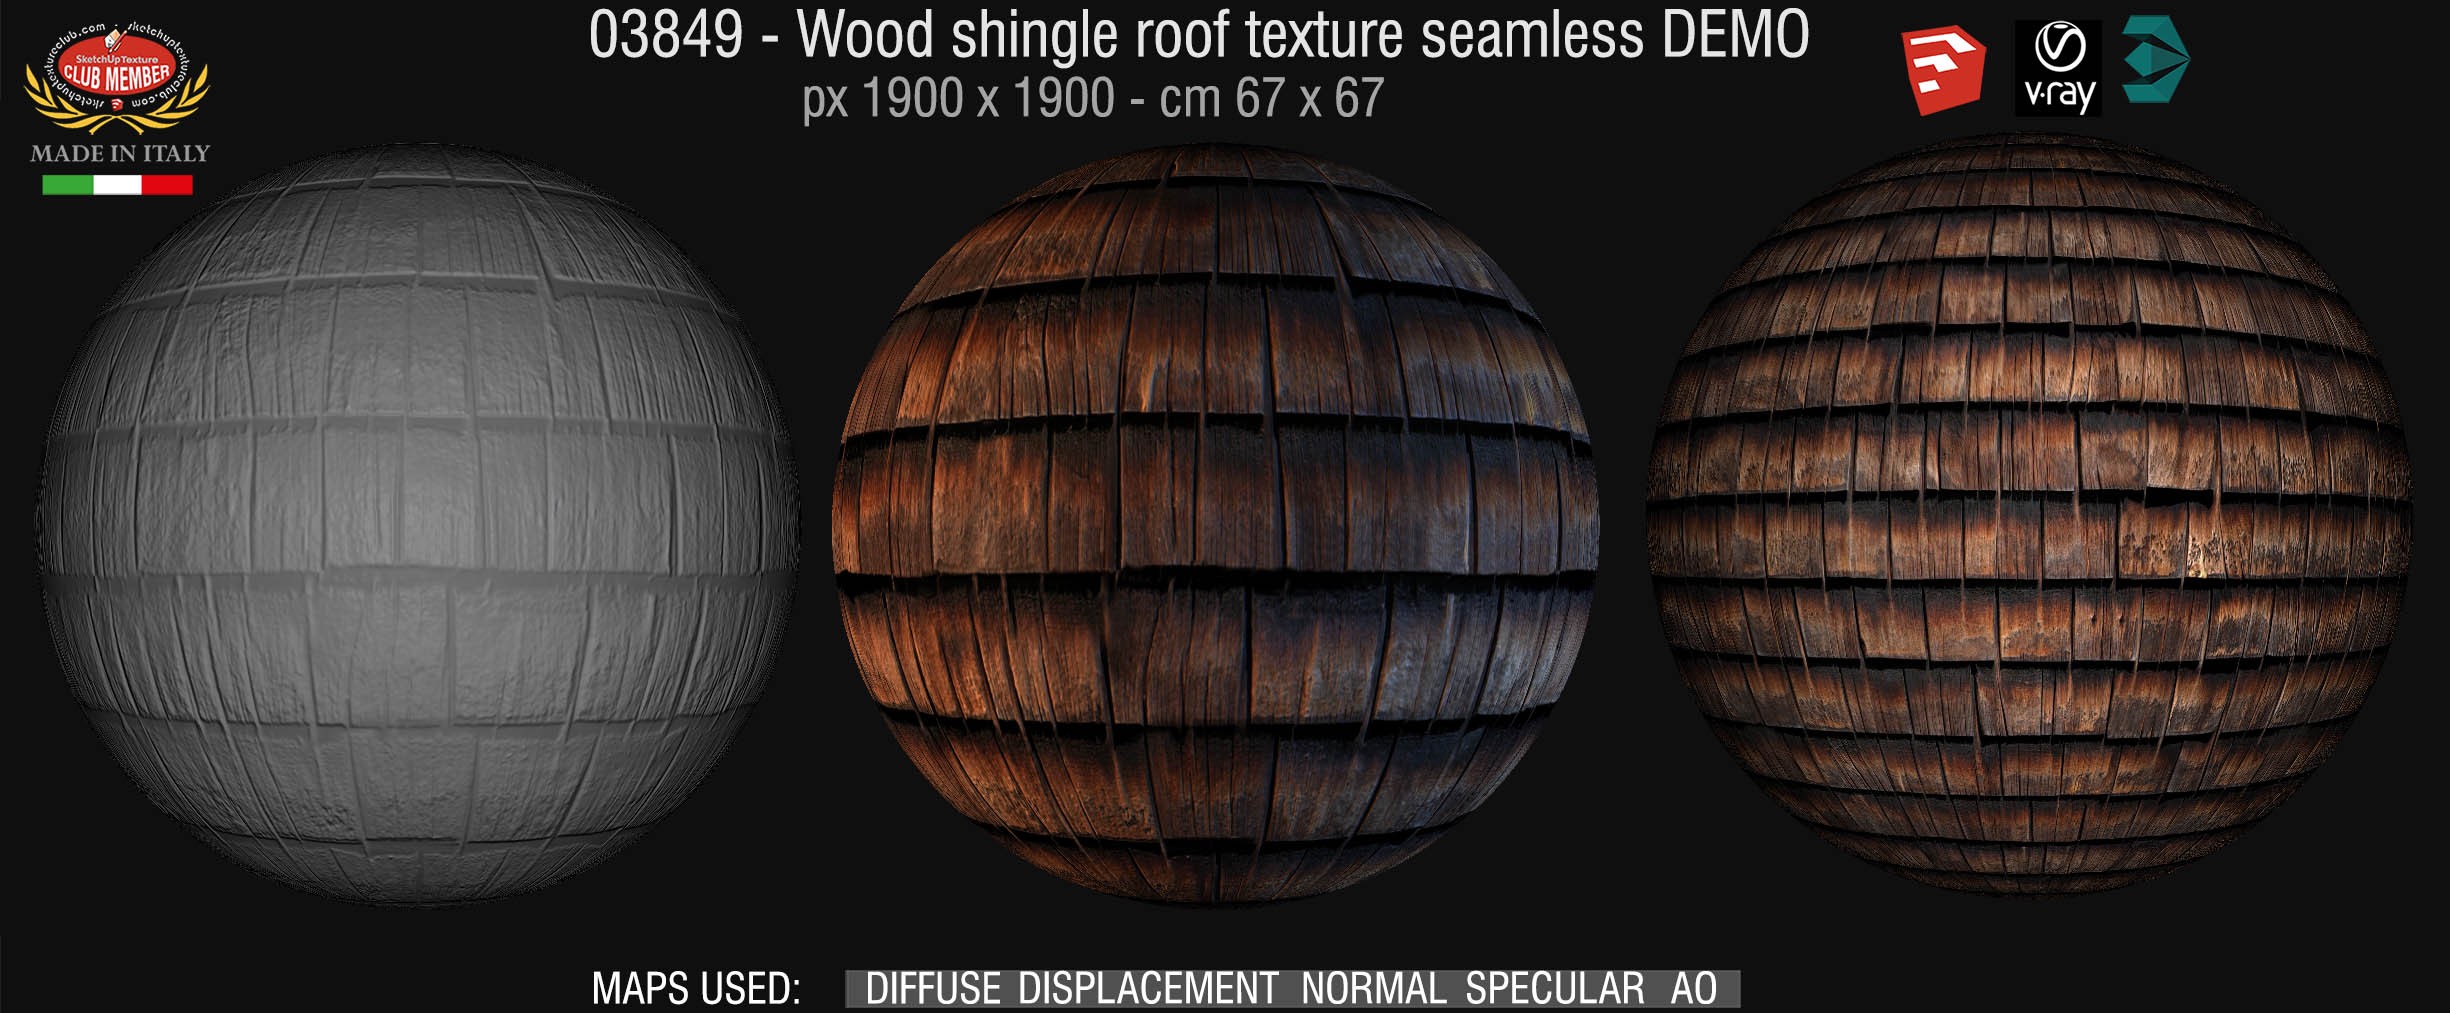 03849 Wood shingle roof texture seamless + maps DEMO